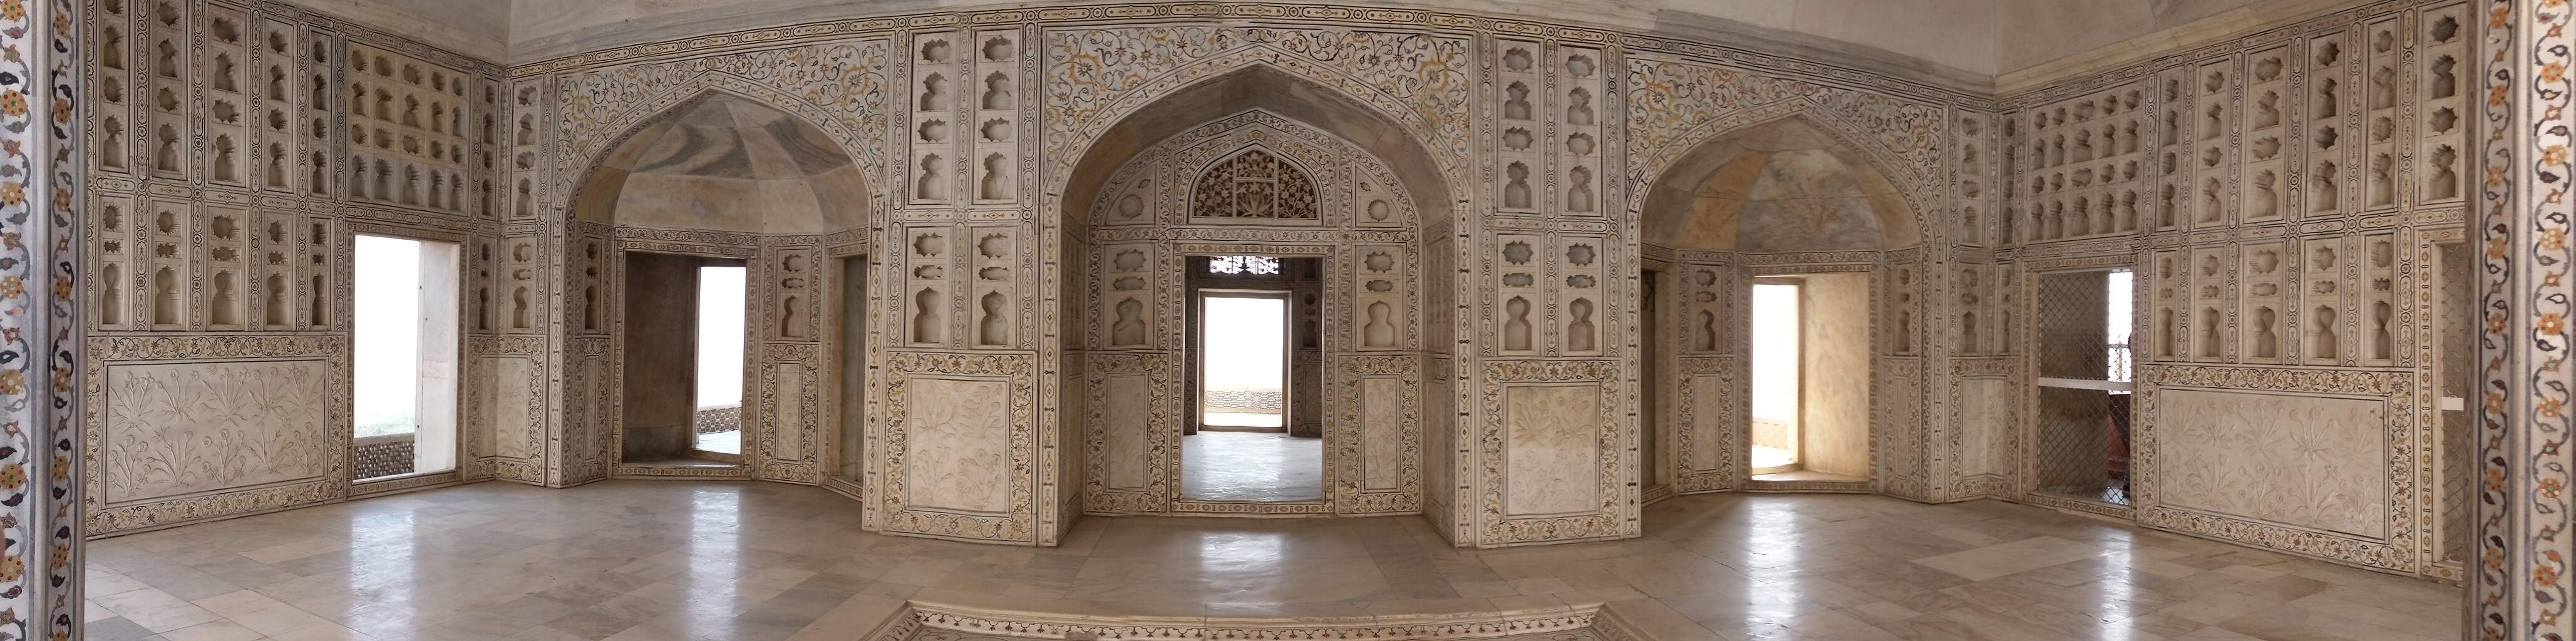 Agra Fort - Musamman  Burj